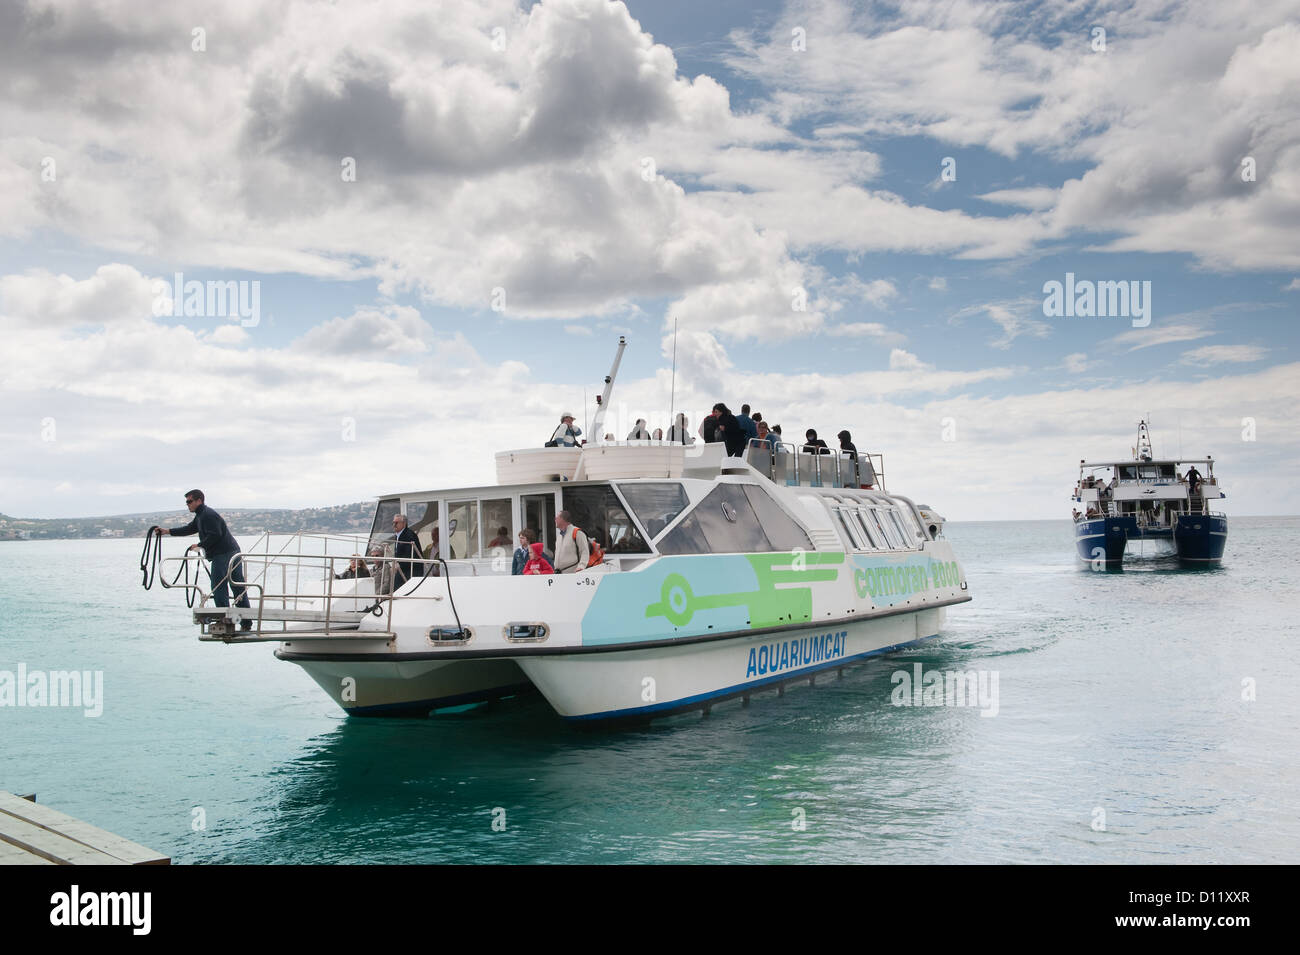 Peguera, Majorca, Spain, tourists on a sightseeing boat Stock Photo